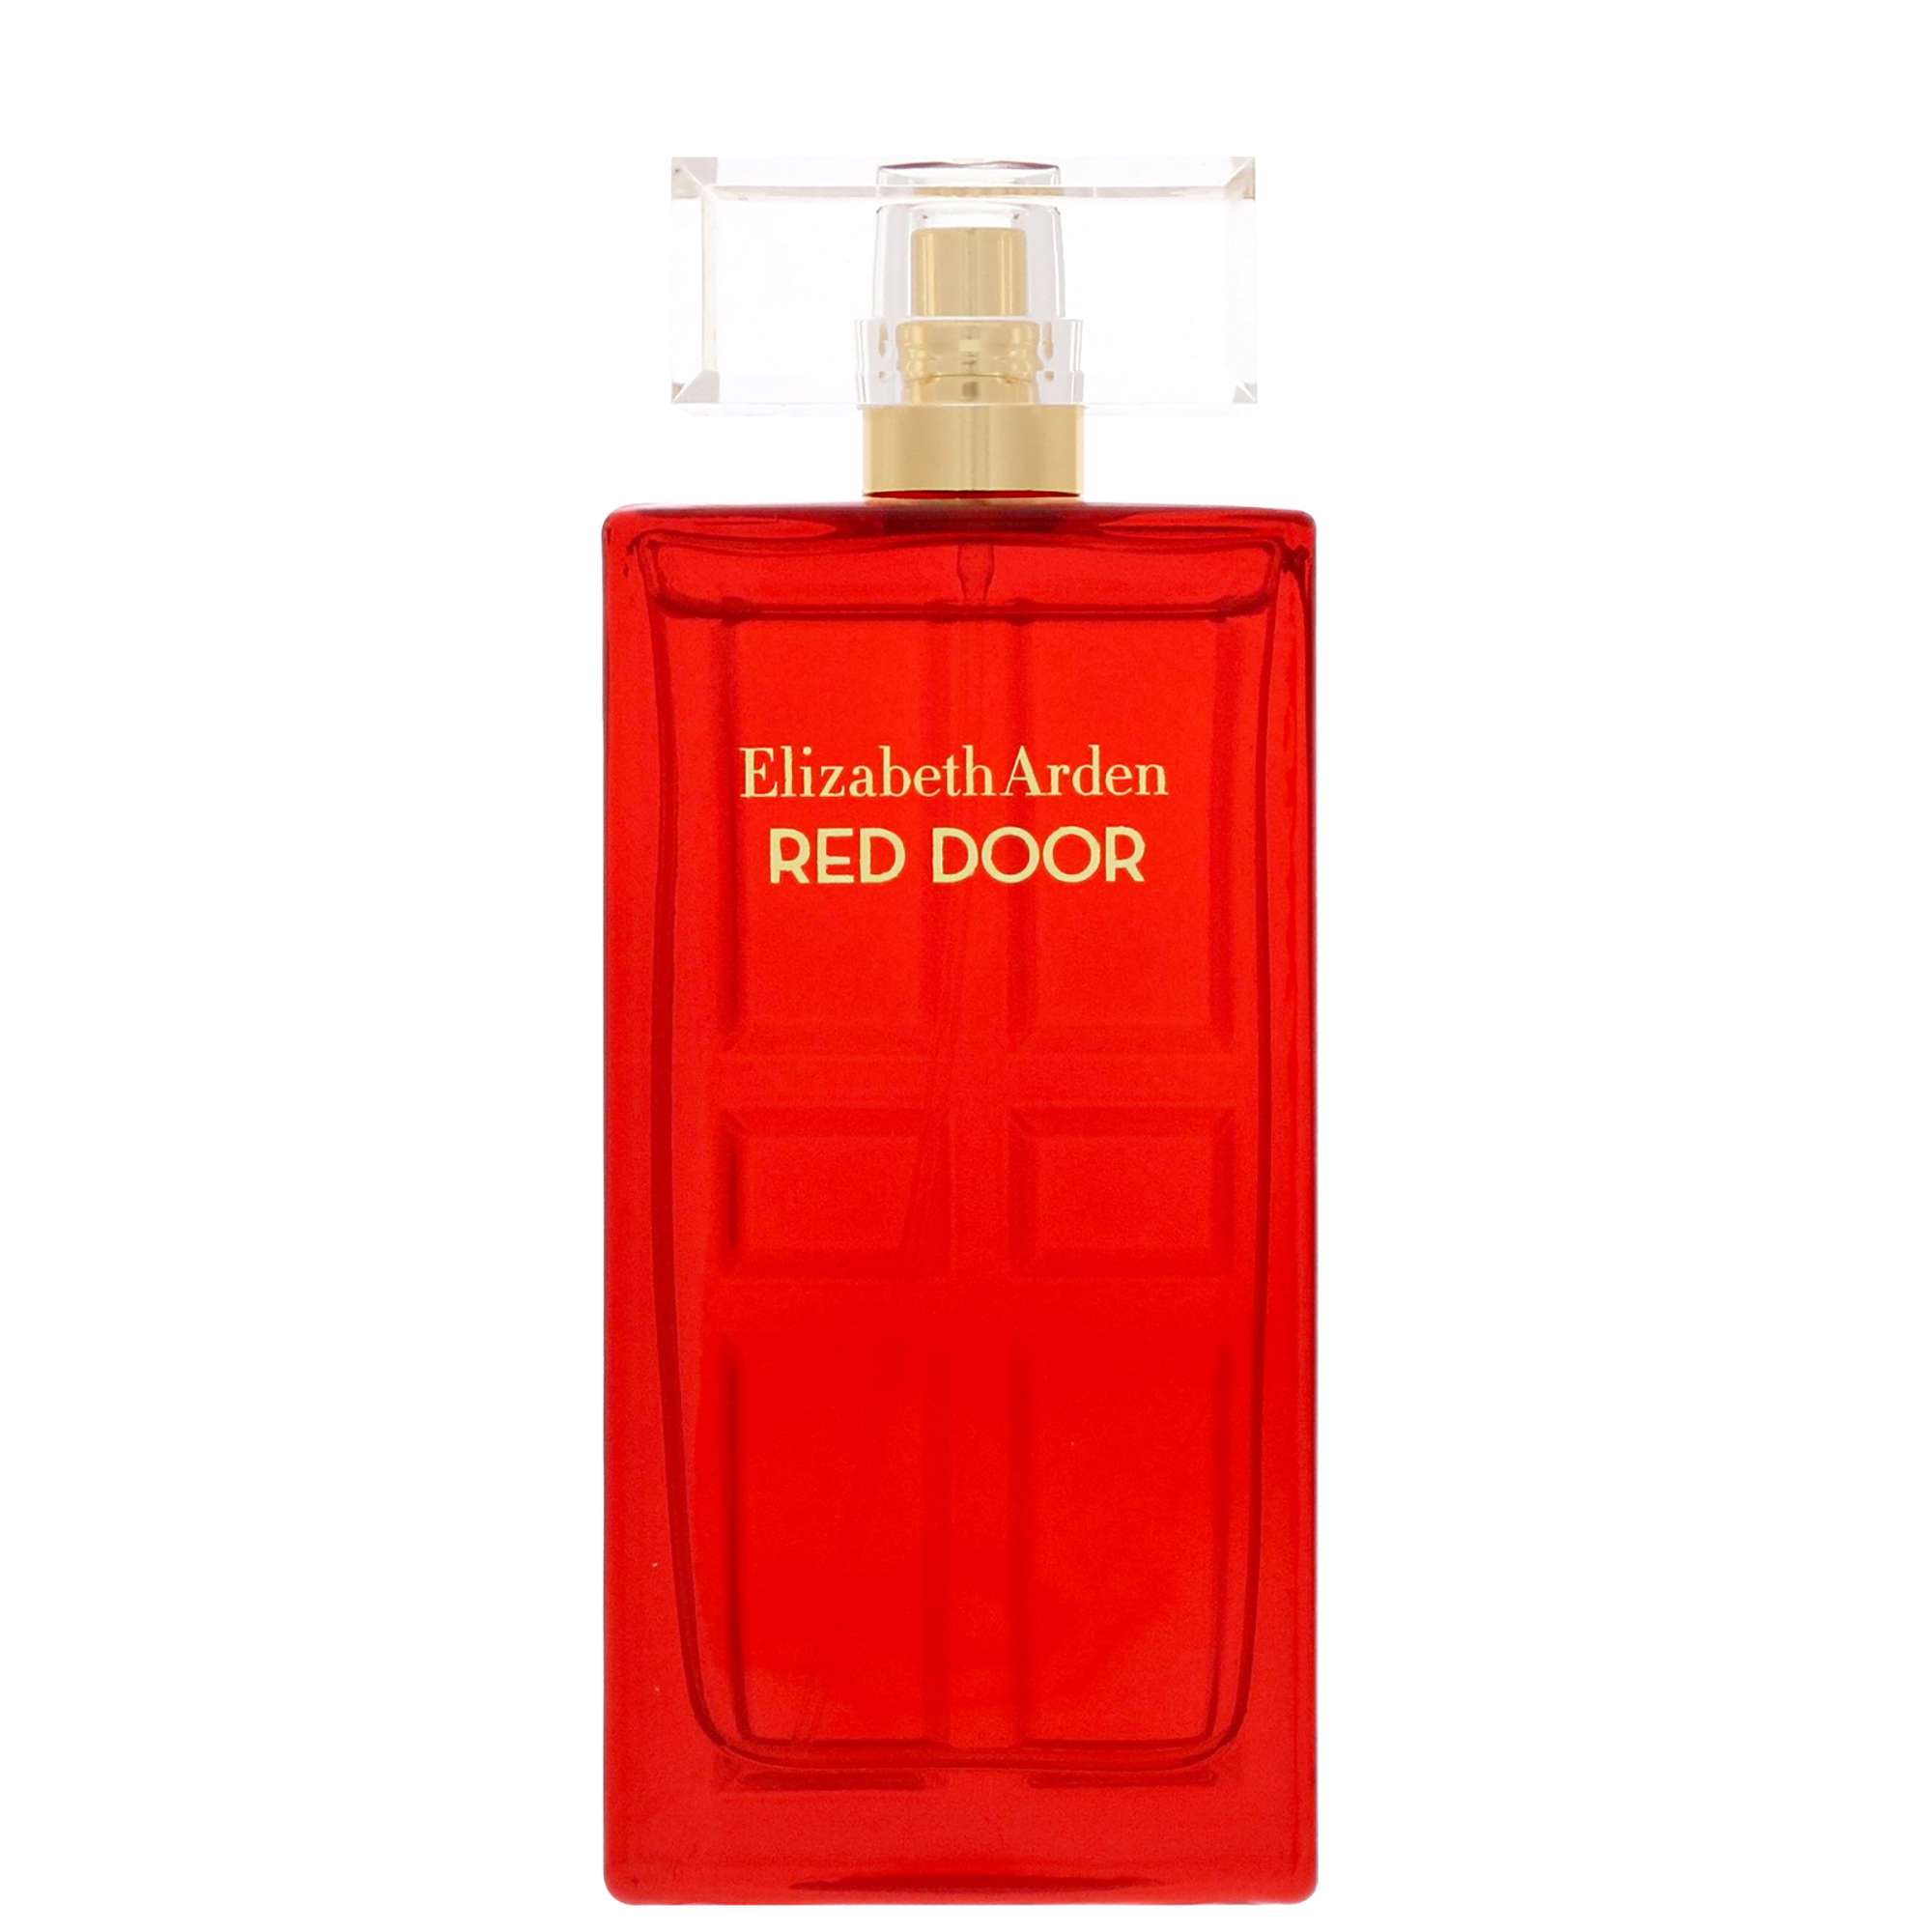 Photos - Women's Fragrance Elizabeth Arden Red Door Eau de Toilette Spray 50ml 